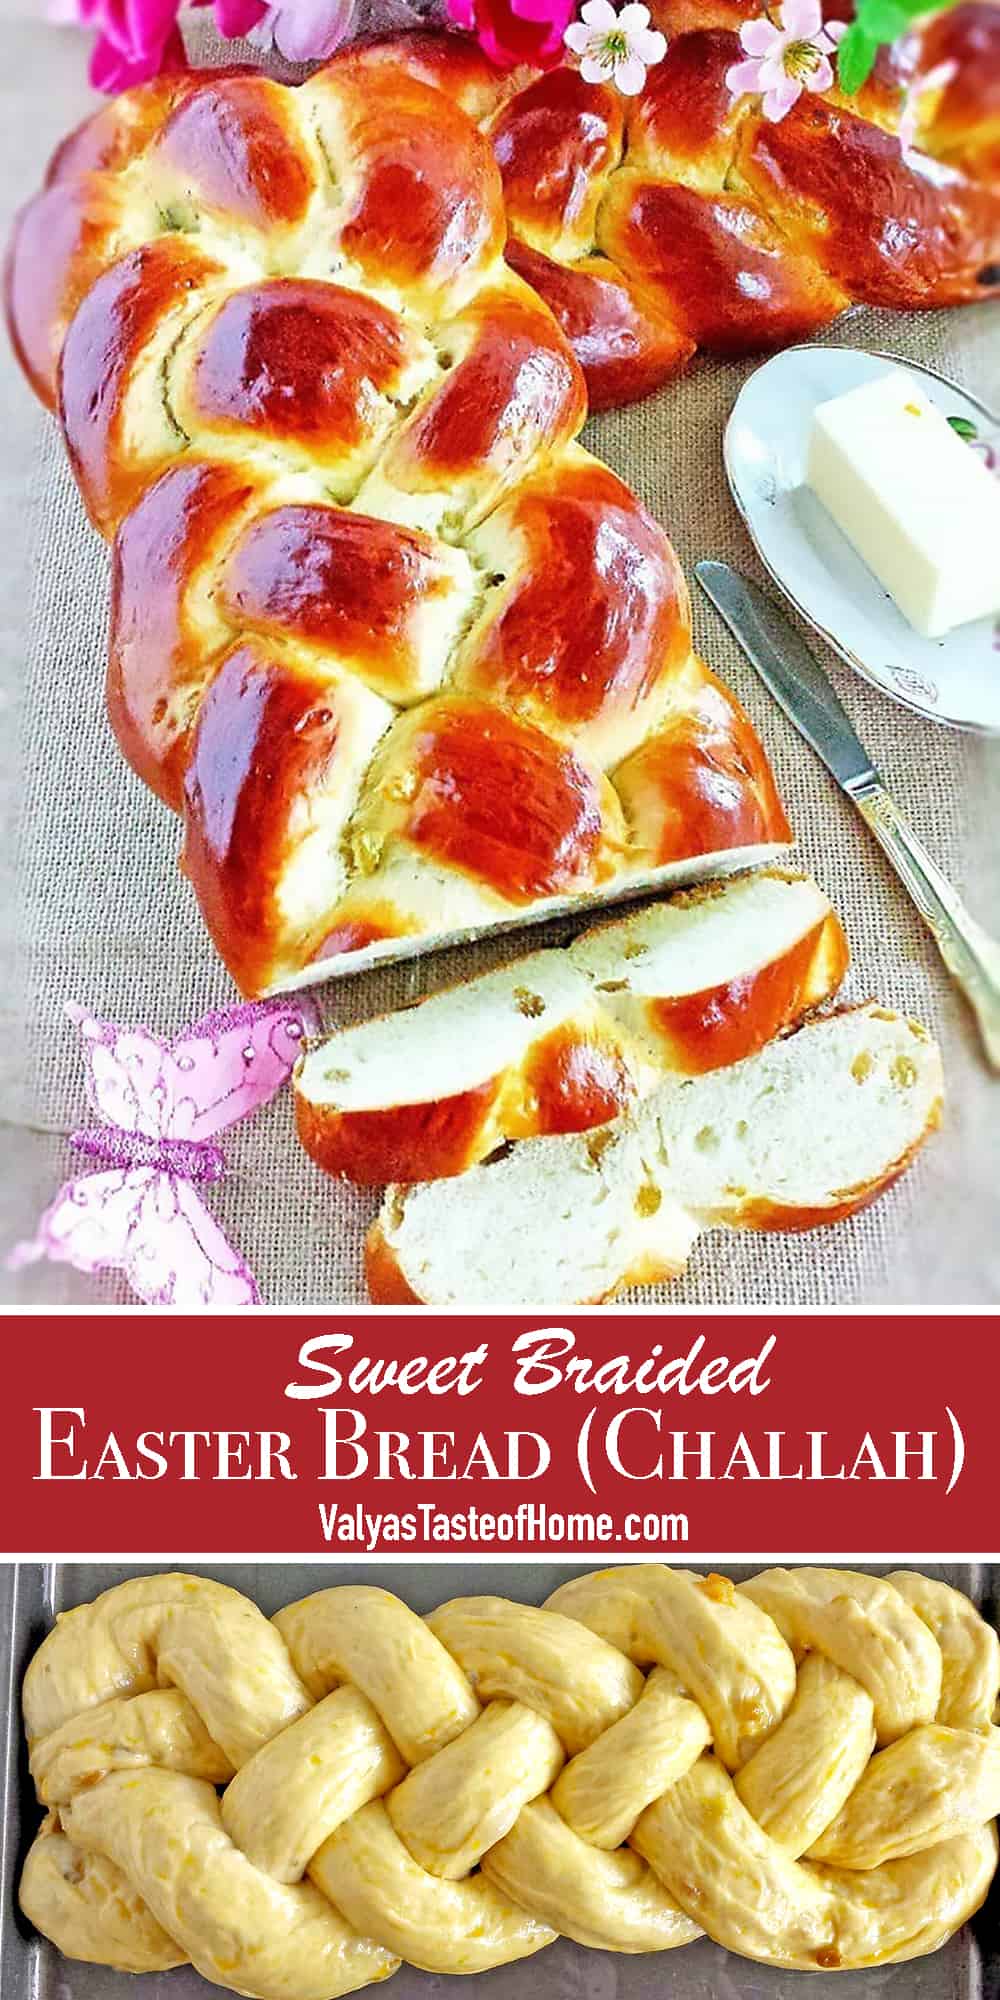 Sweet Braided Easter Bread with Raisins - Valya's Taste of Home